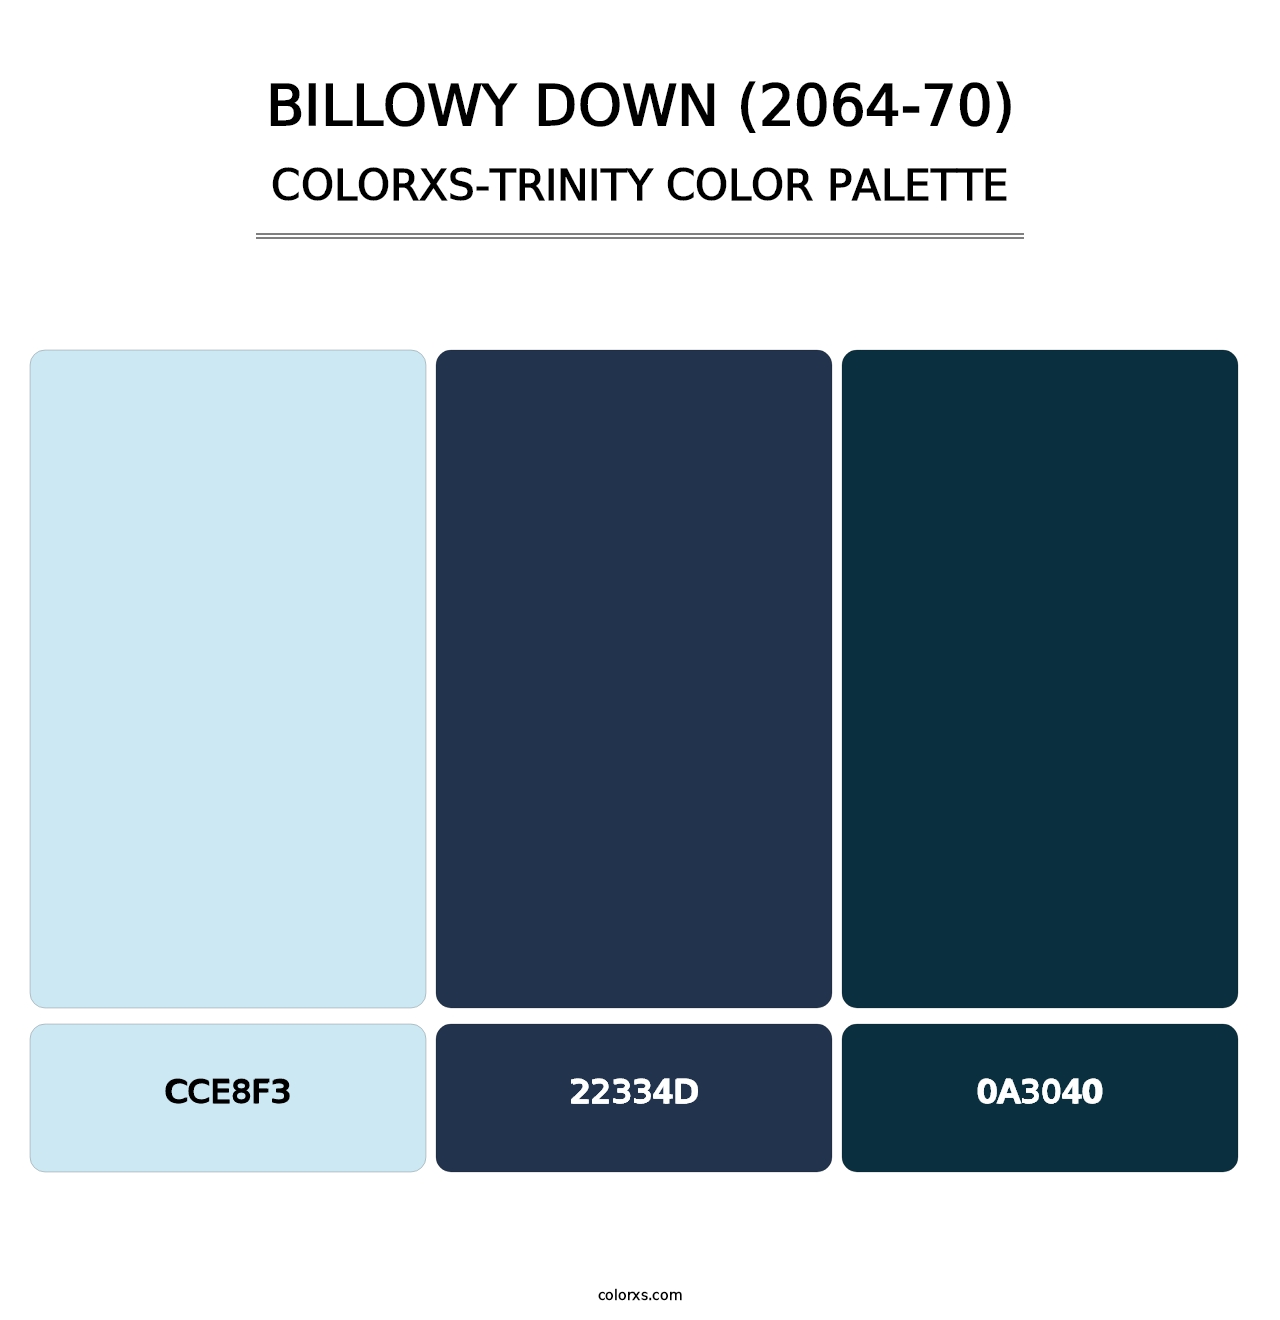 Billowy Down (2064-70) - Colorxs Trinity Palette